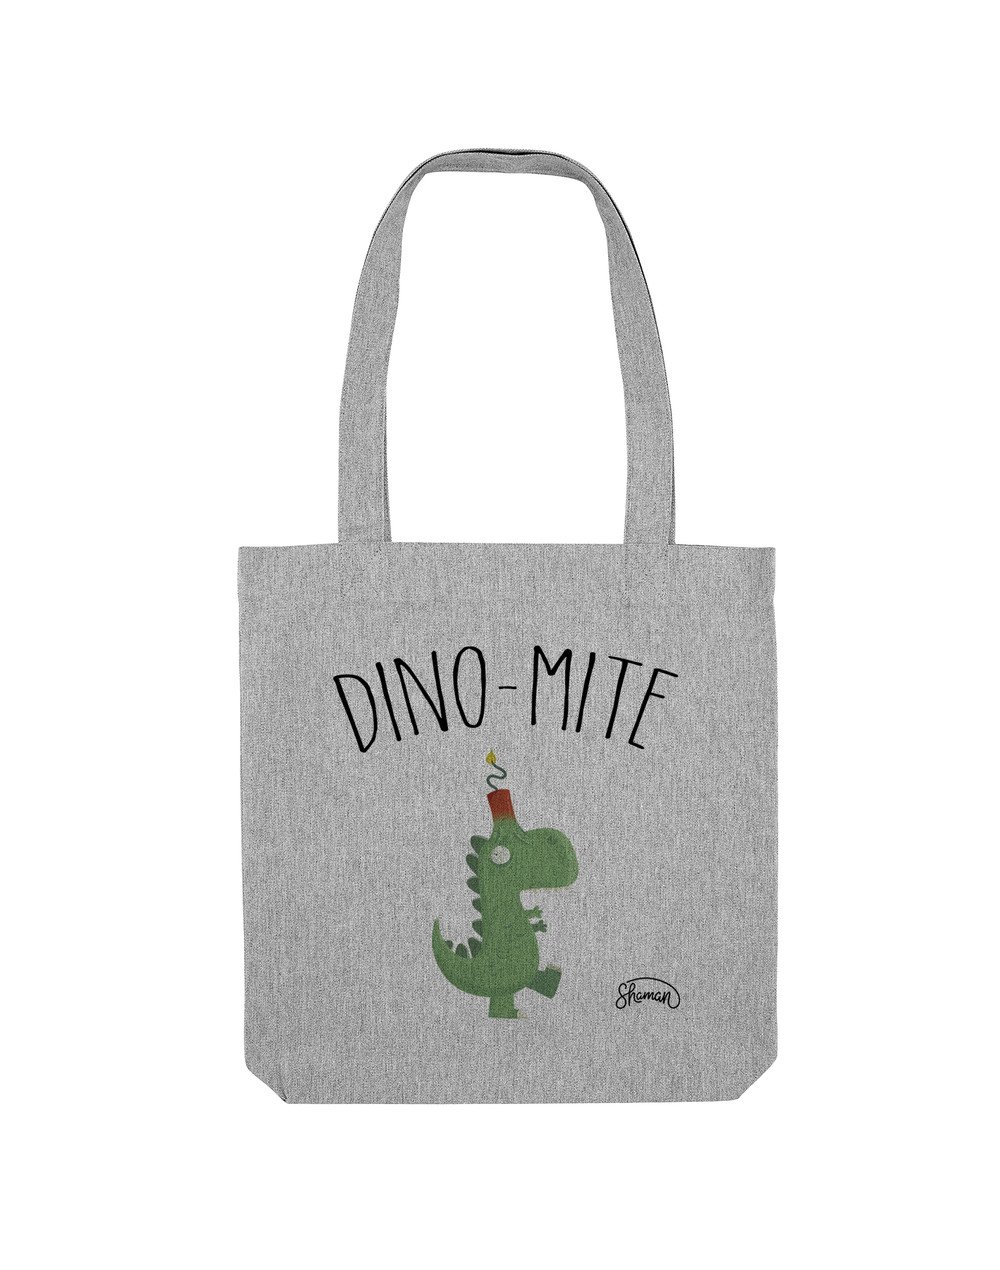 Tote Bag "Dinomite"